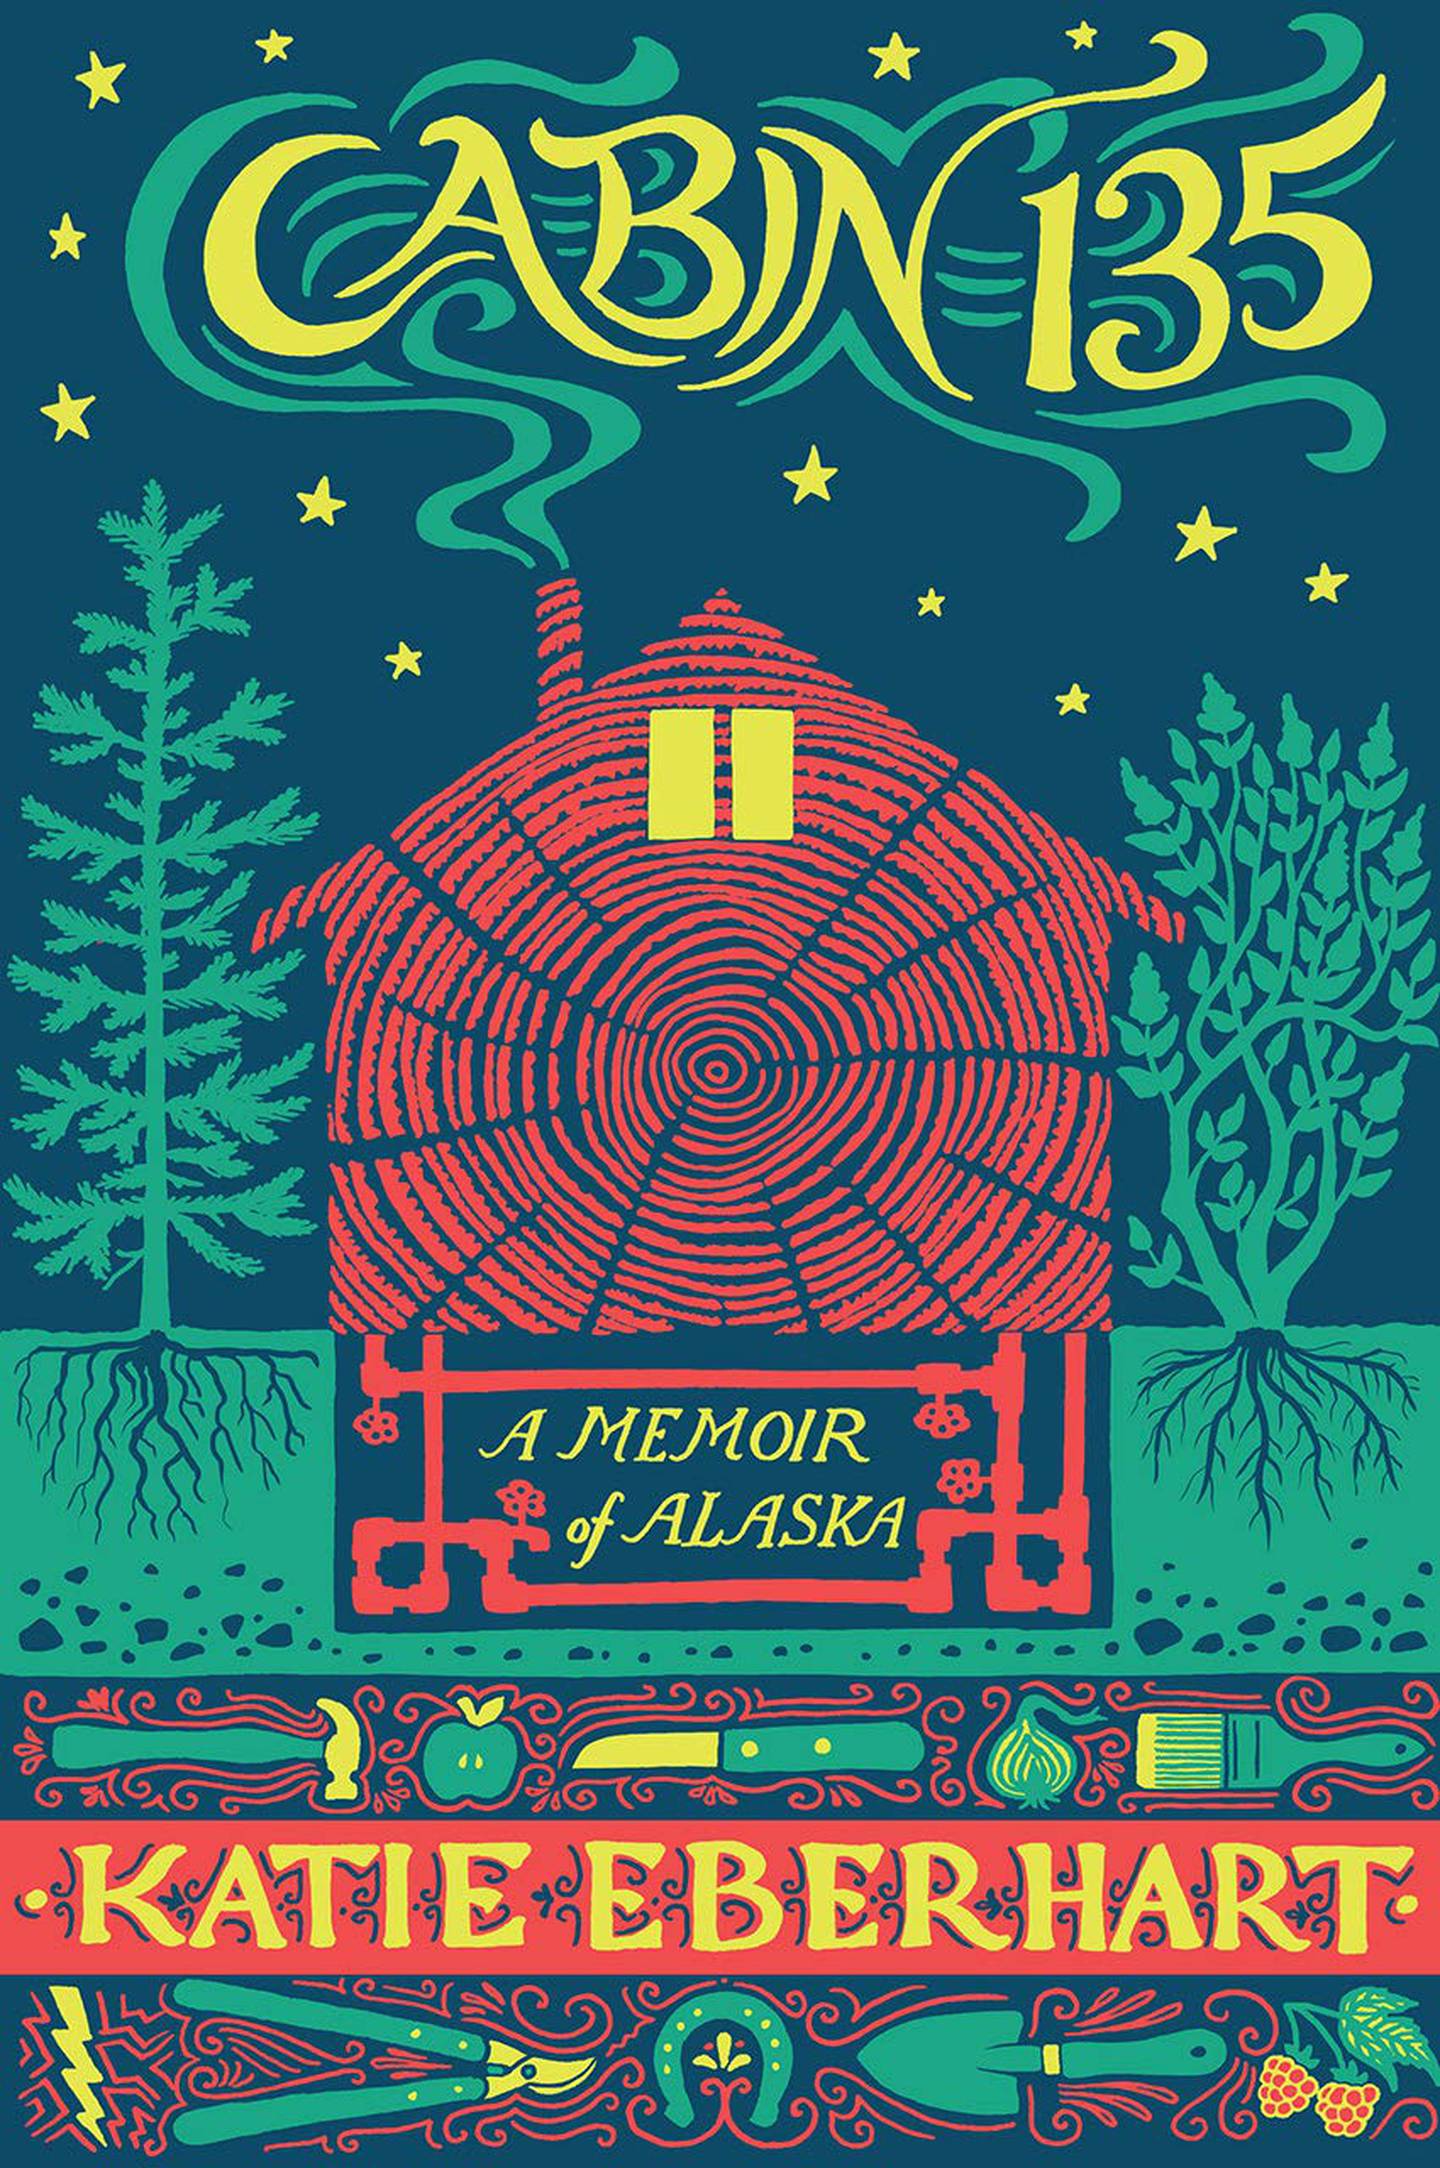 “Cabin 135: A Memoir of Alaska” by Katie Eberhart.